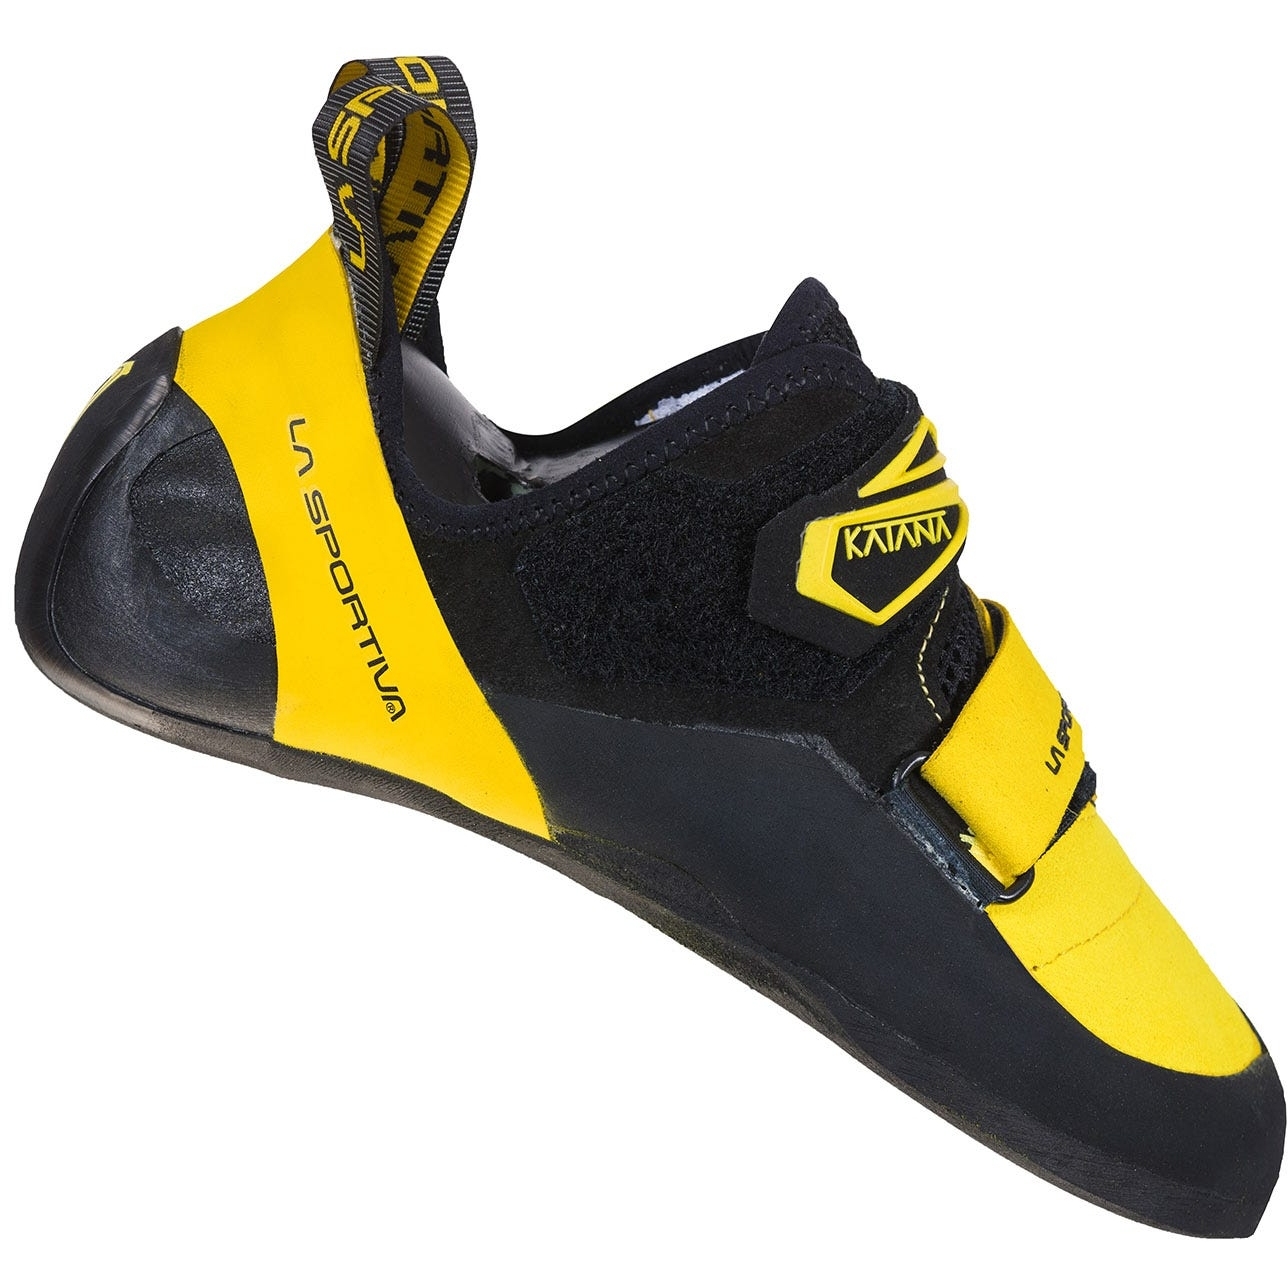 Image of La Sportiva Katana Climbing Shoes Men - Yellow/Black 20L100999